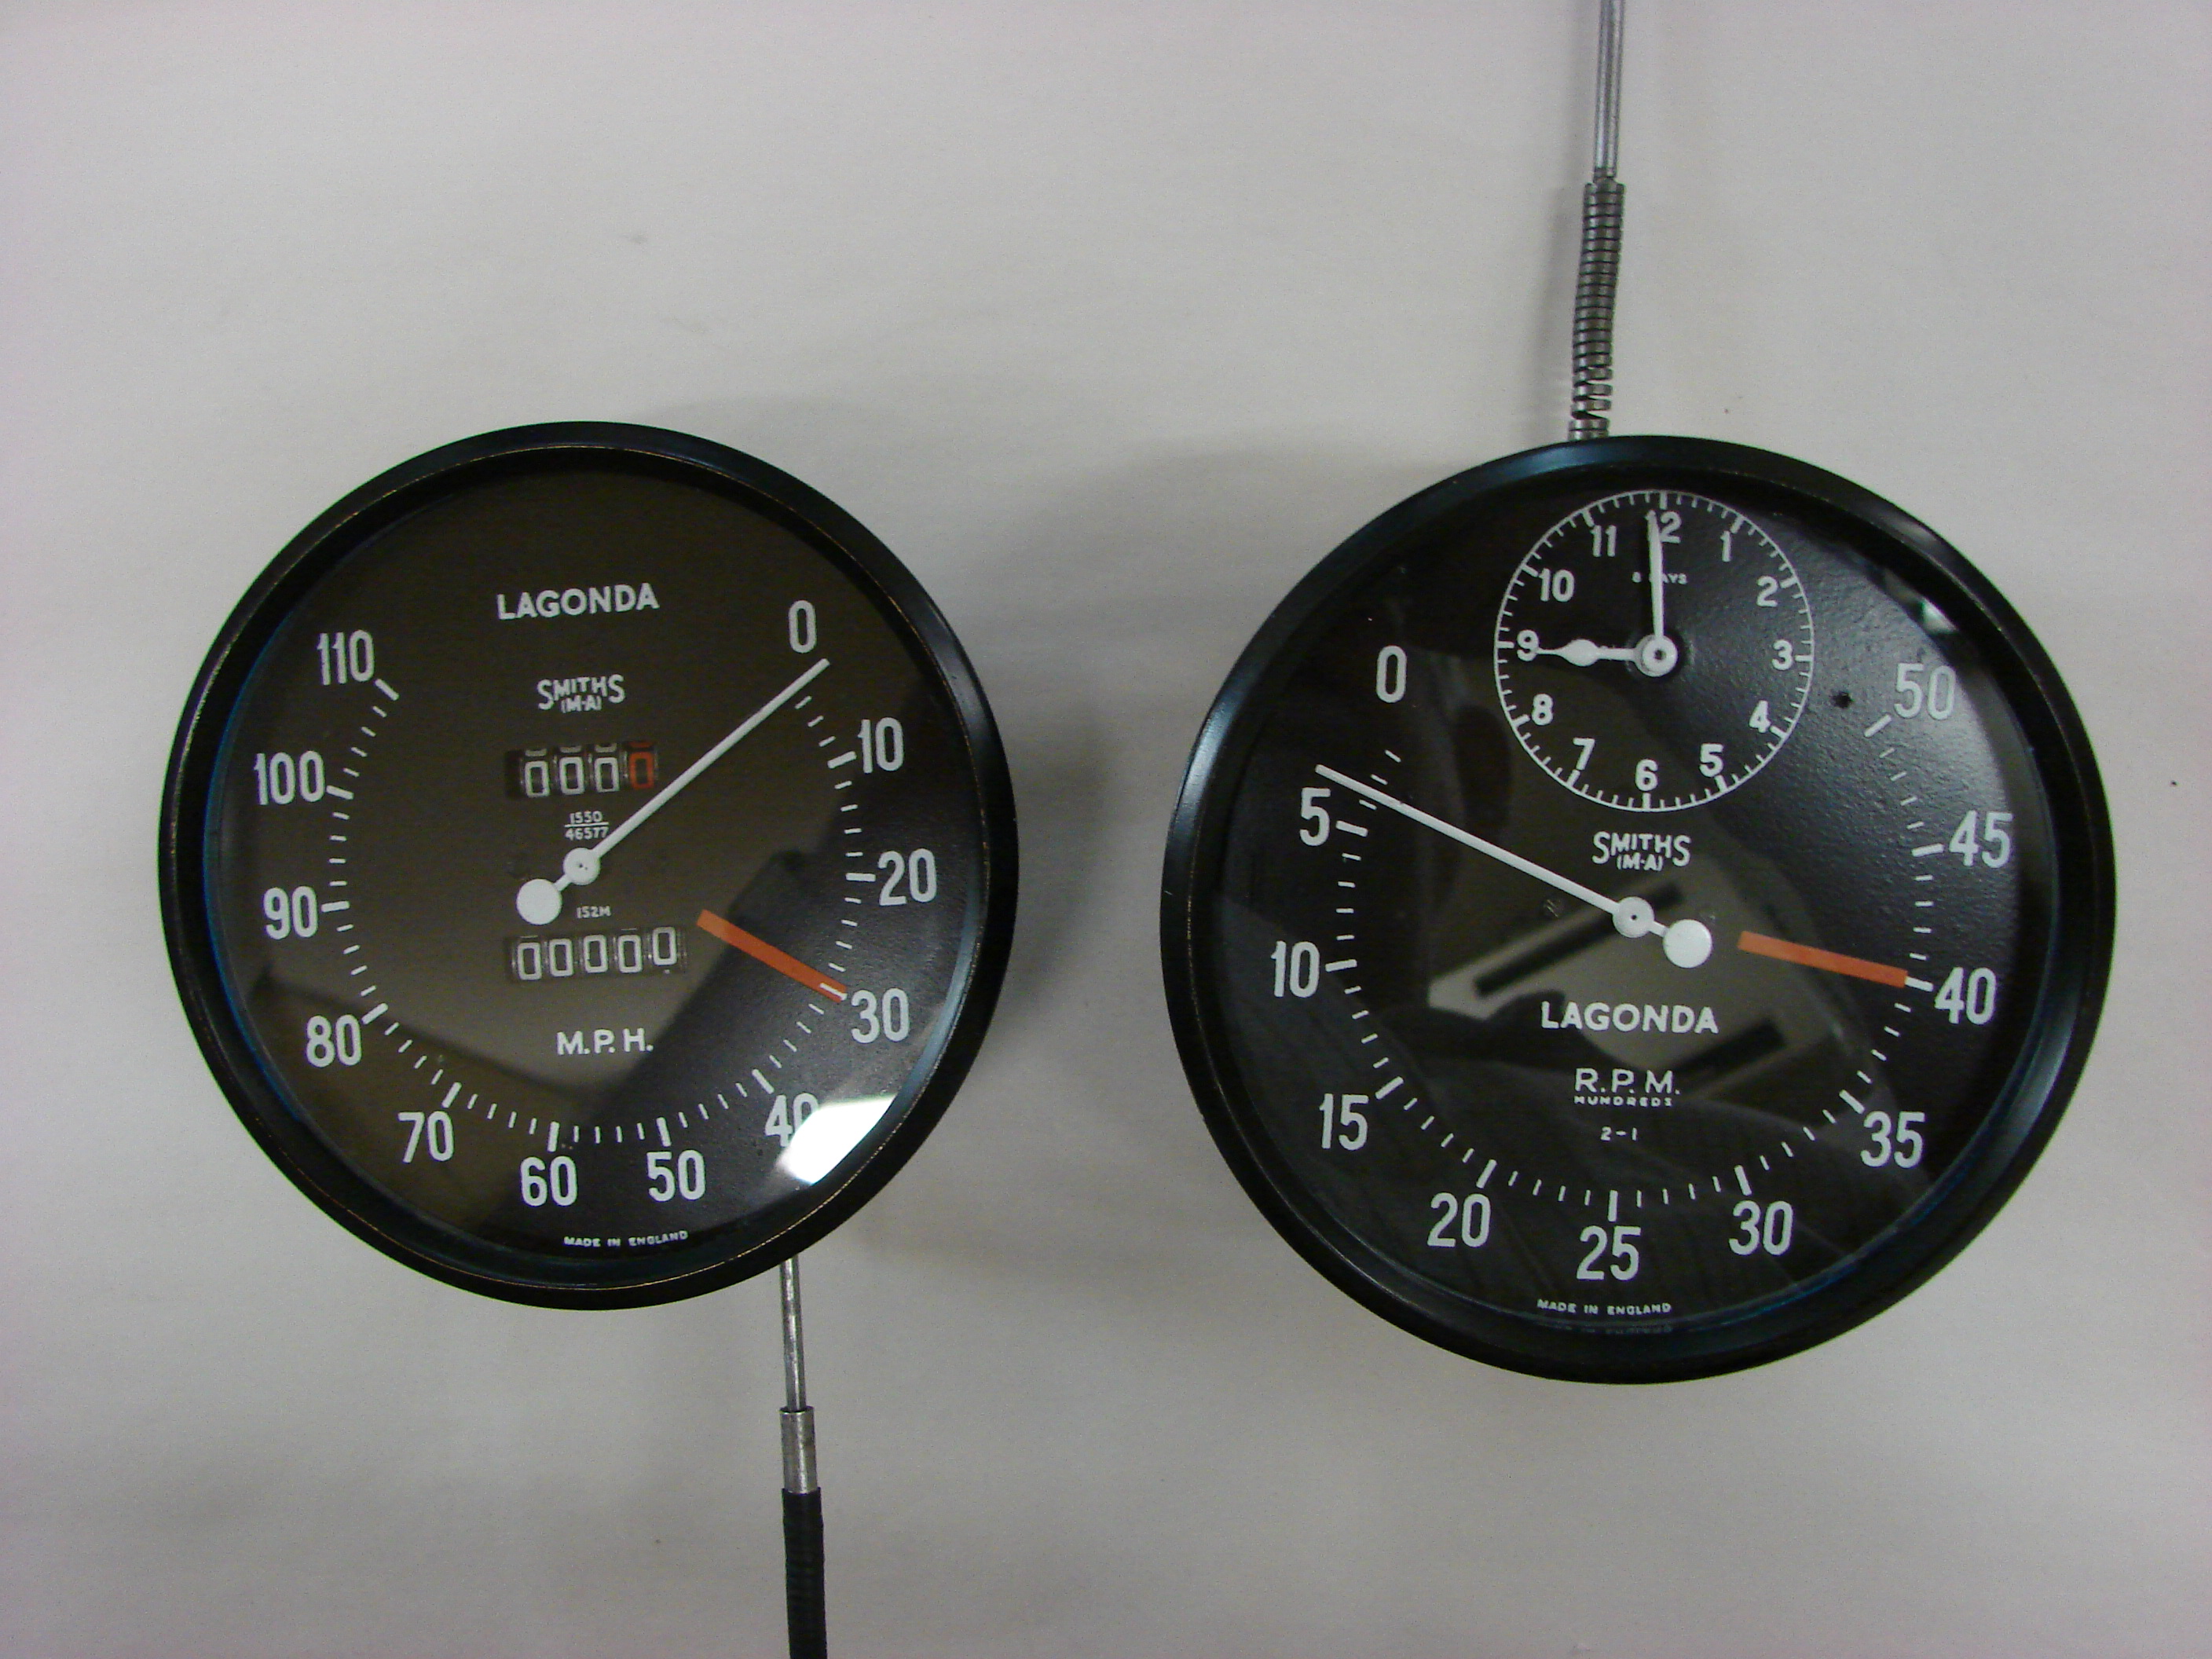 Two black speedometers